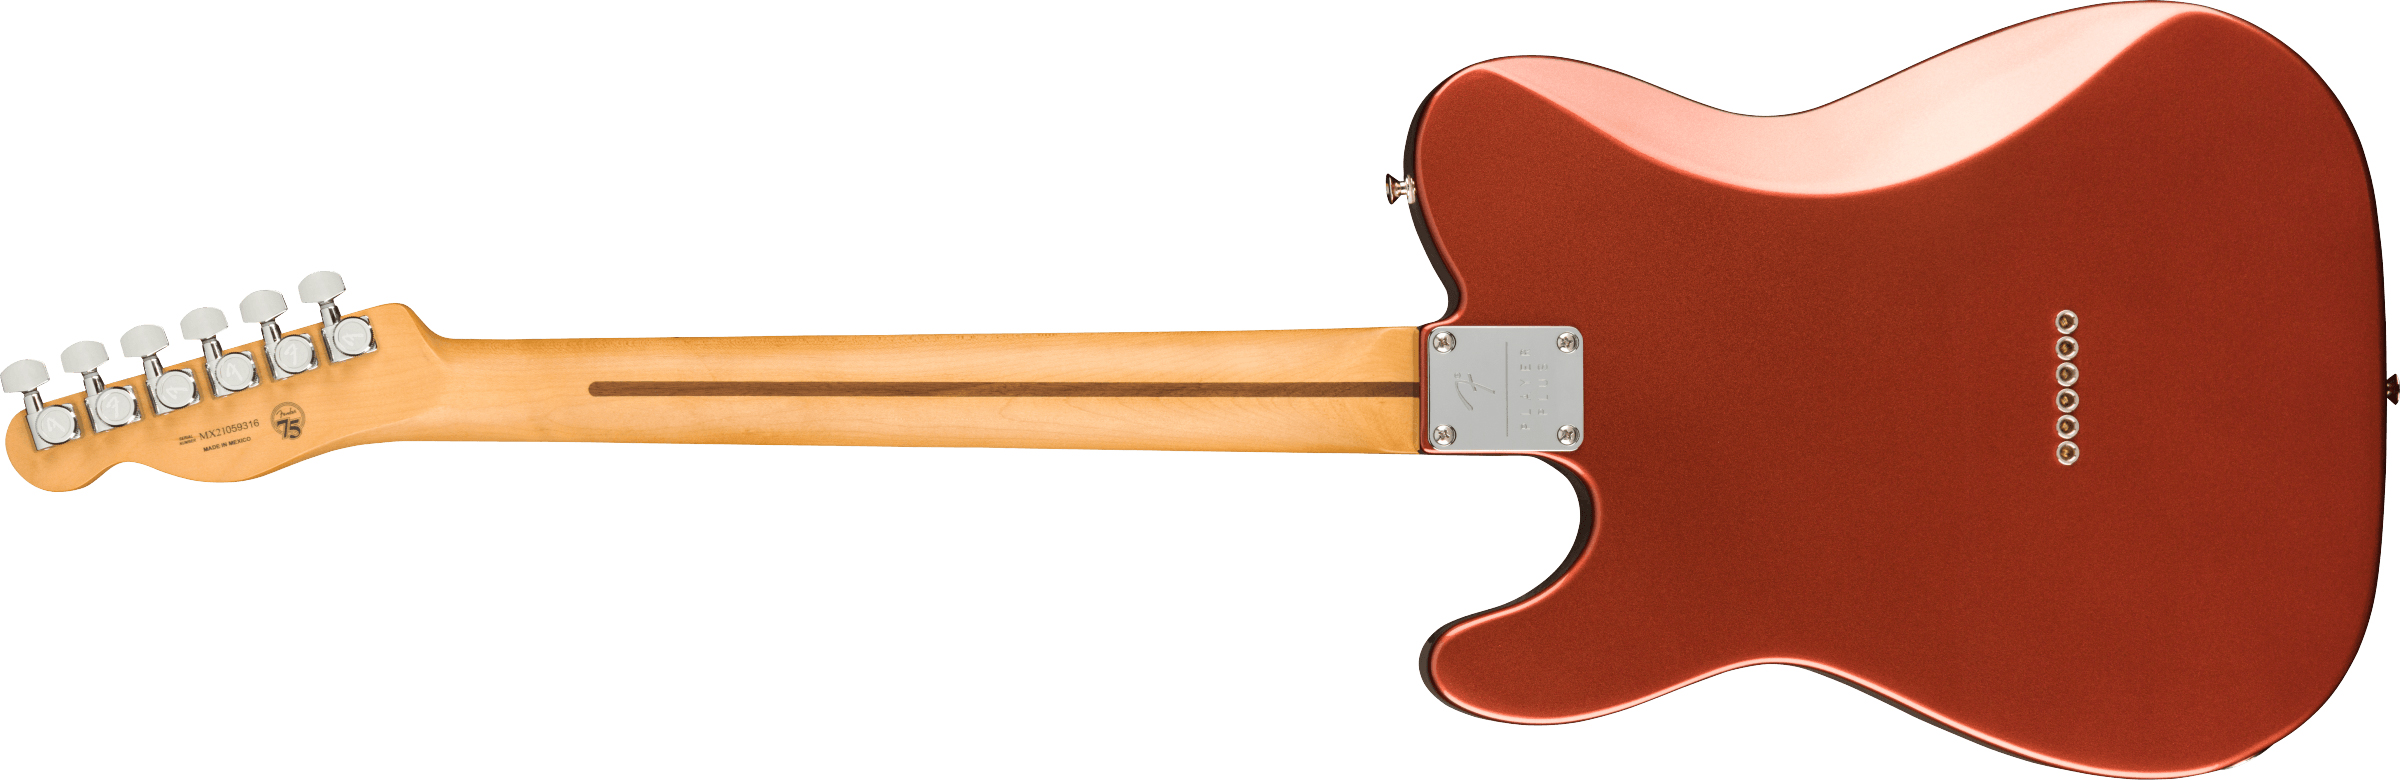 Fender Tele Player Plus Mex 2s Ht Mn - Aged Candy Apple Red - Guitare Électrique Forme Tel - Variation 1